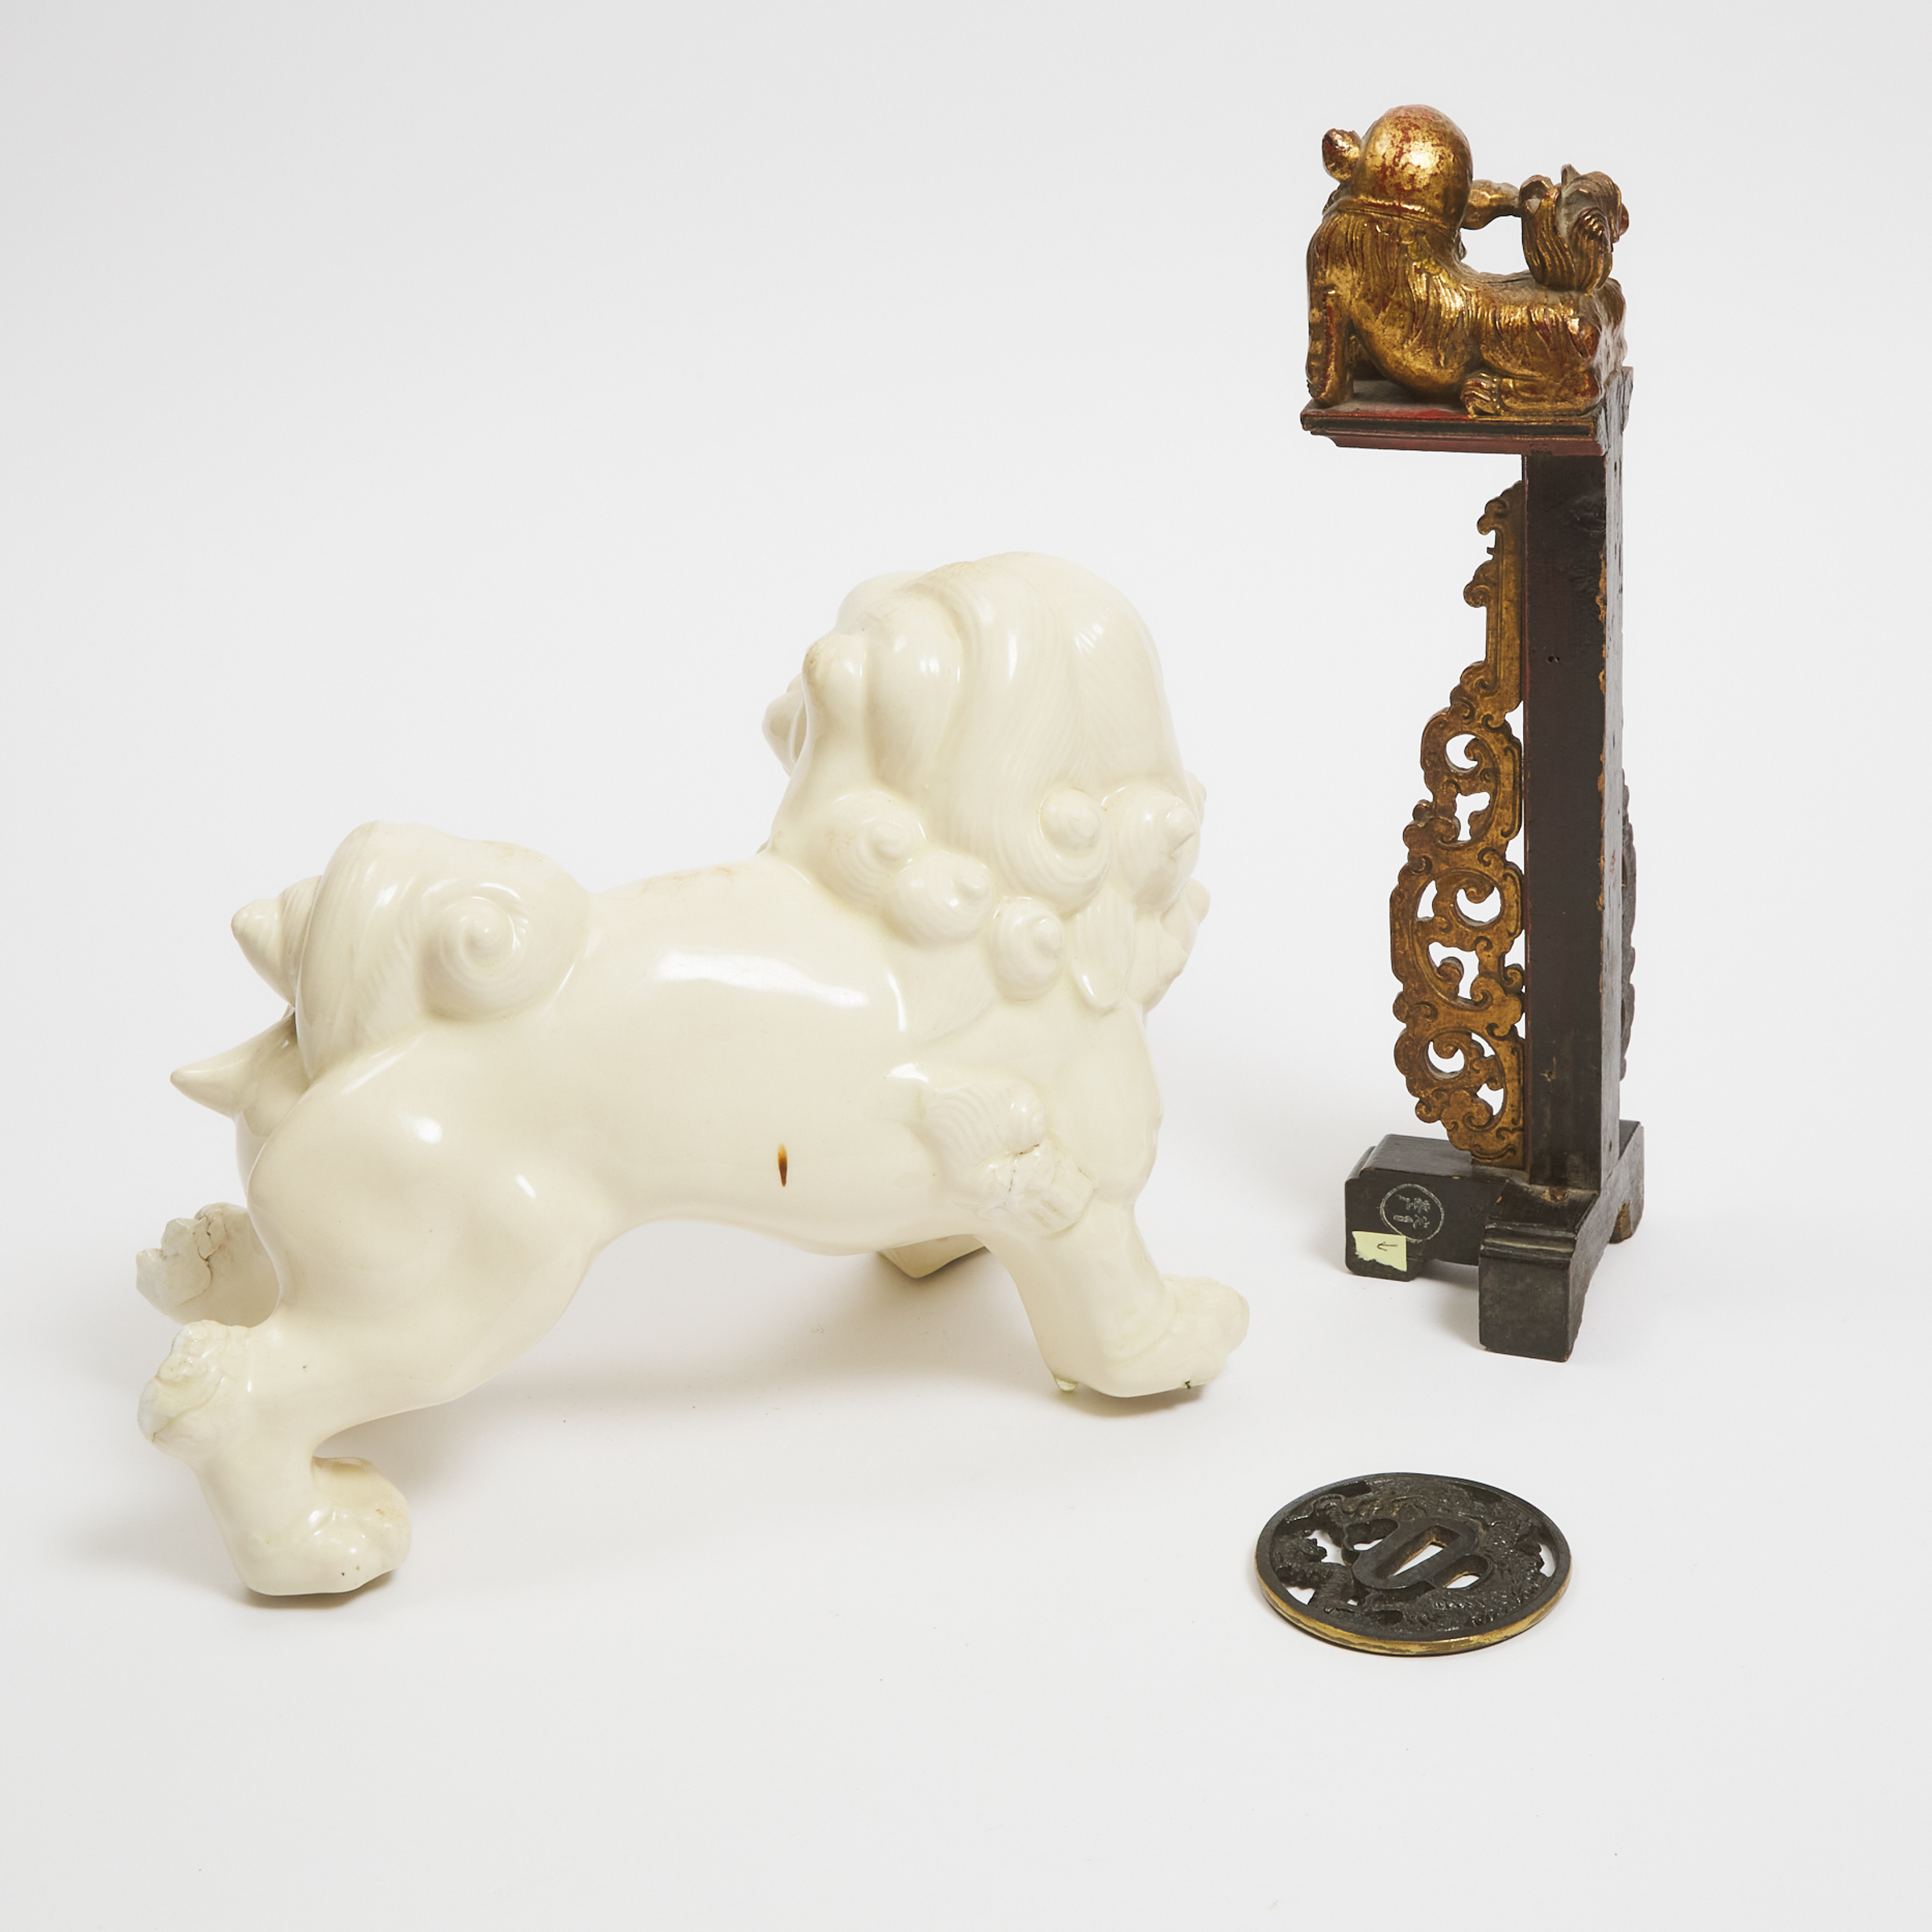 A White Glazed Ceramic Foo Dog, Together With a Gilt Wood Bracket and a Japanese Tsuba, 19th/20th Century